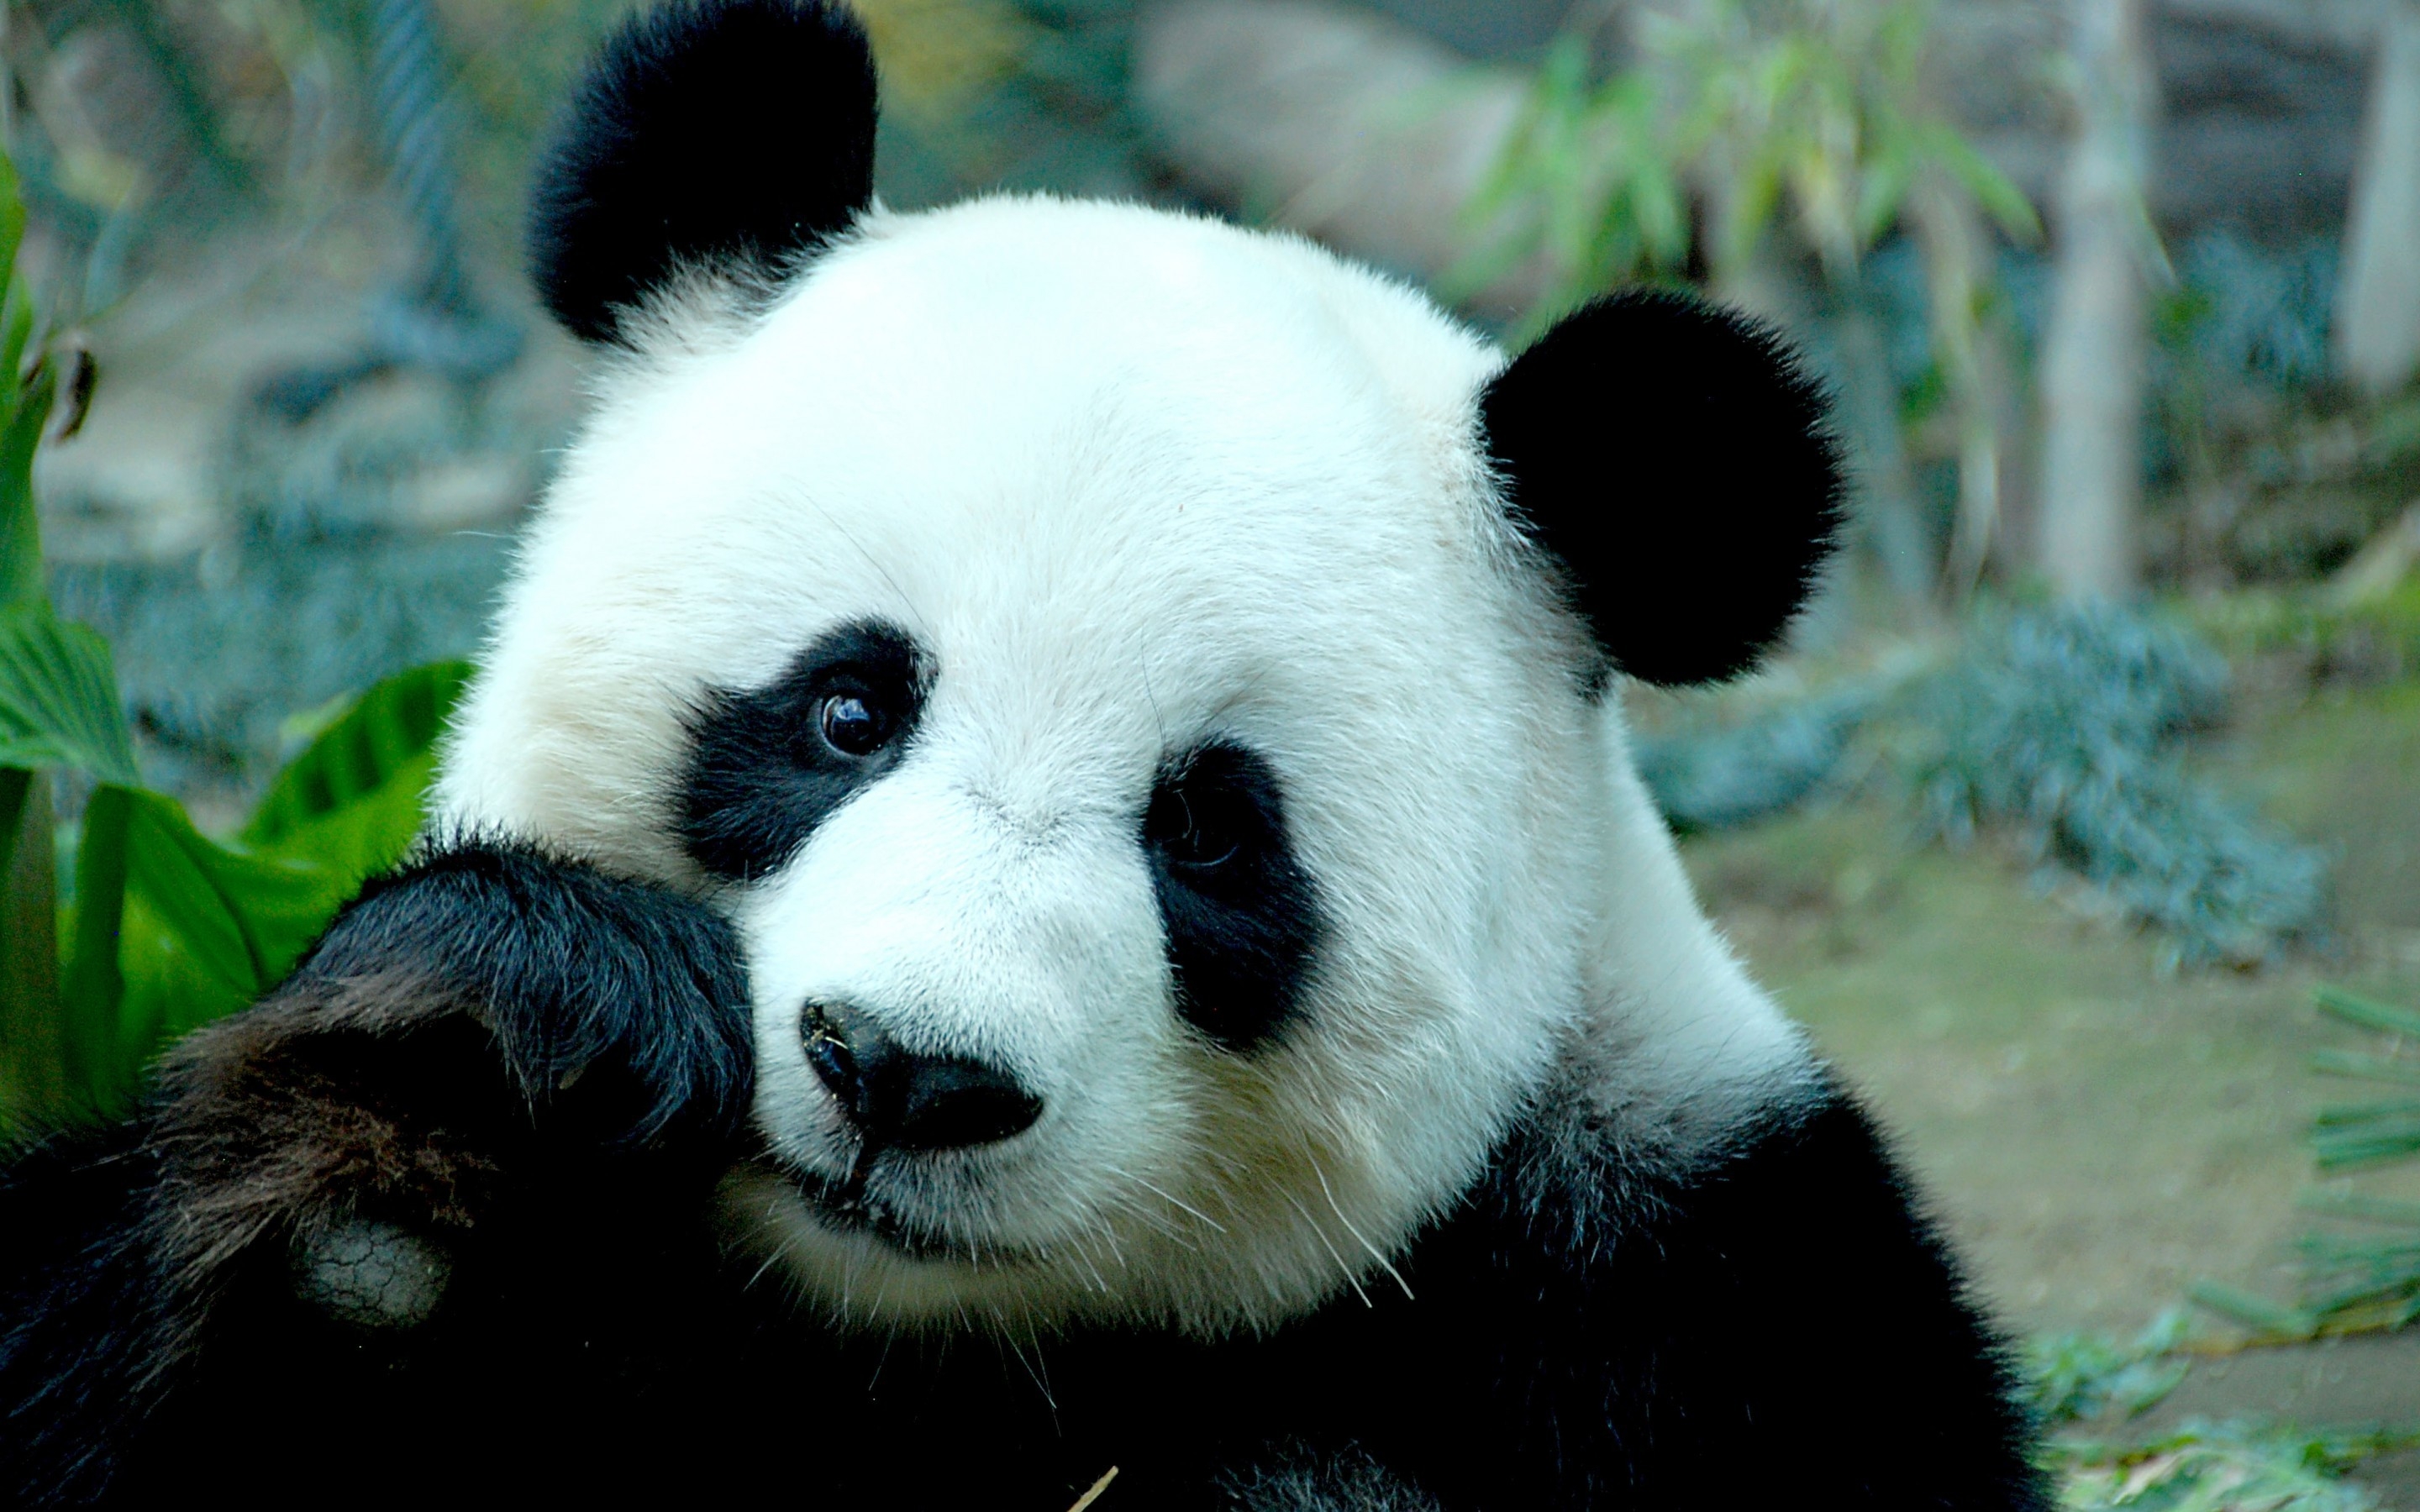 Sad Panda Bear for 2880 x 1800 Retina Display resolution